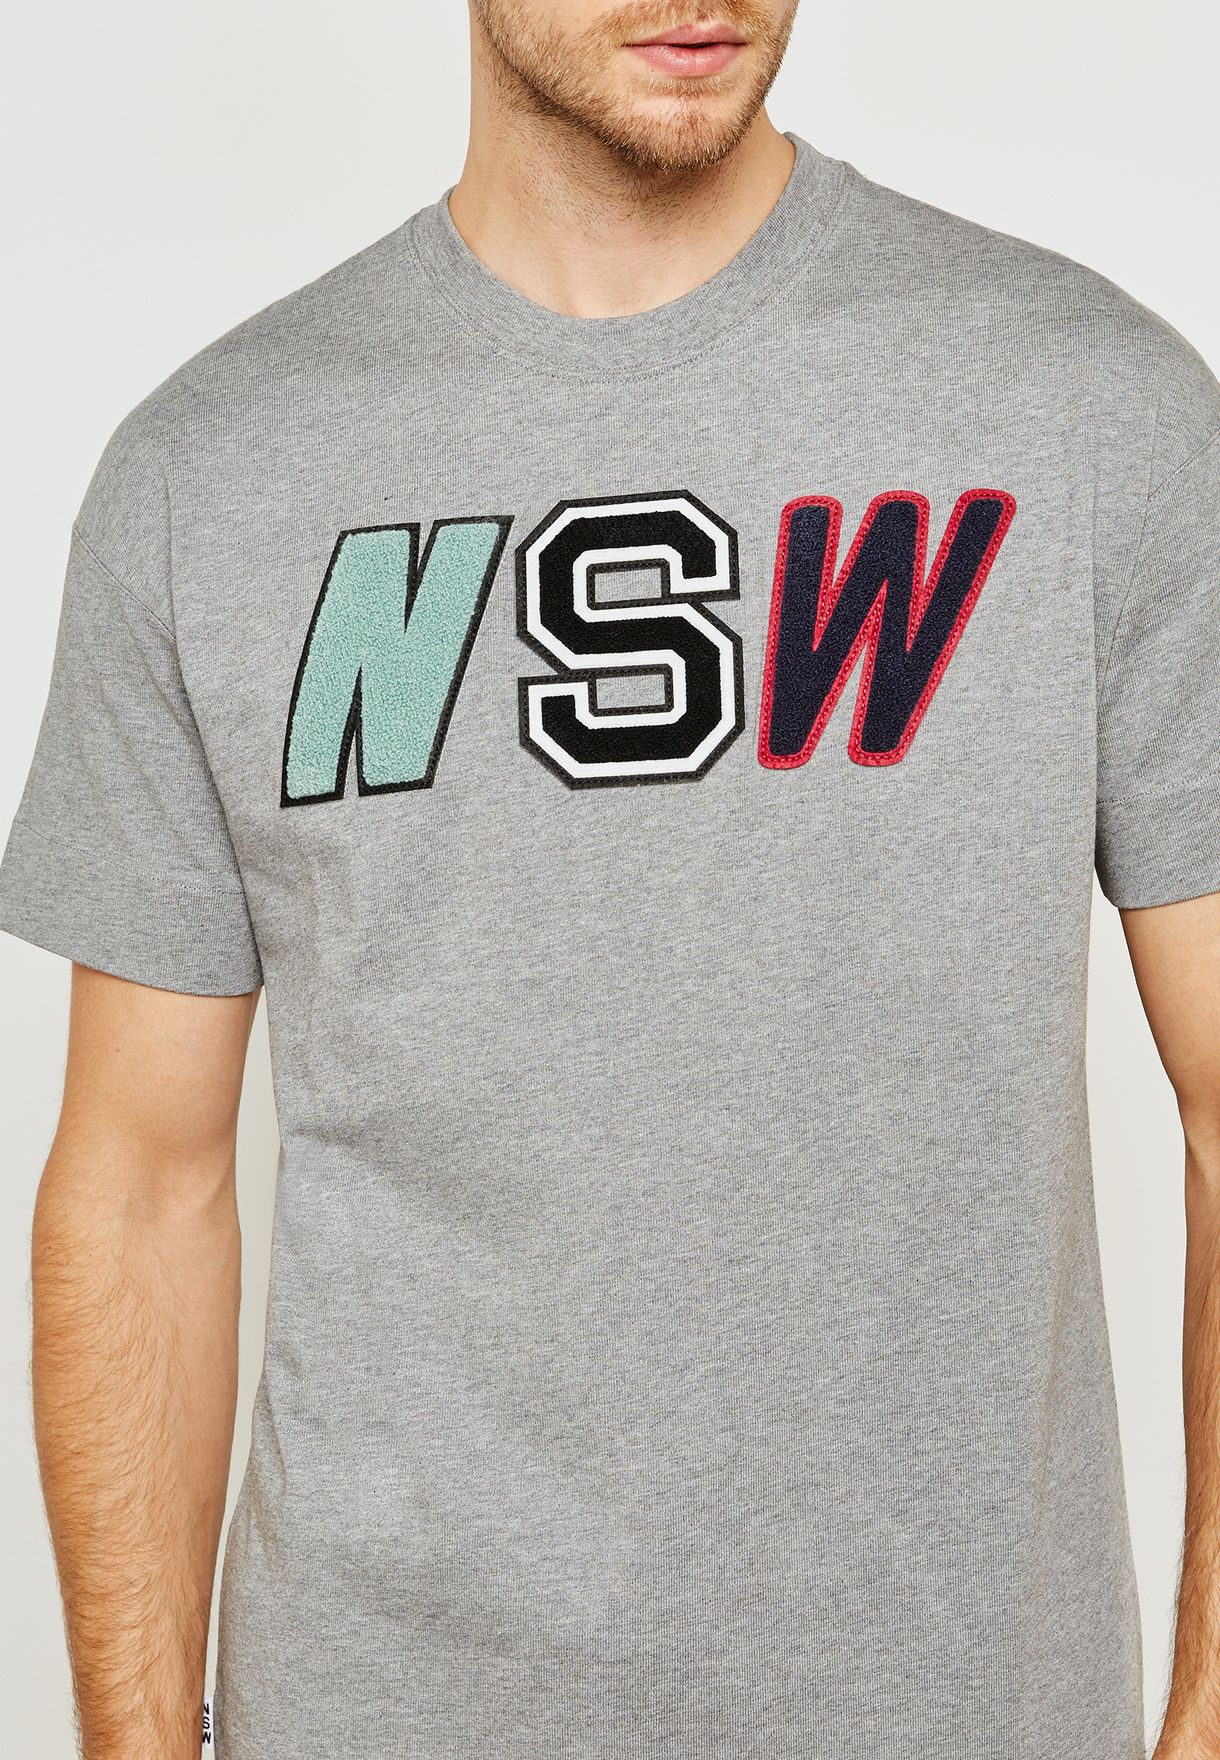 nsw t shirt